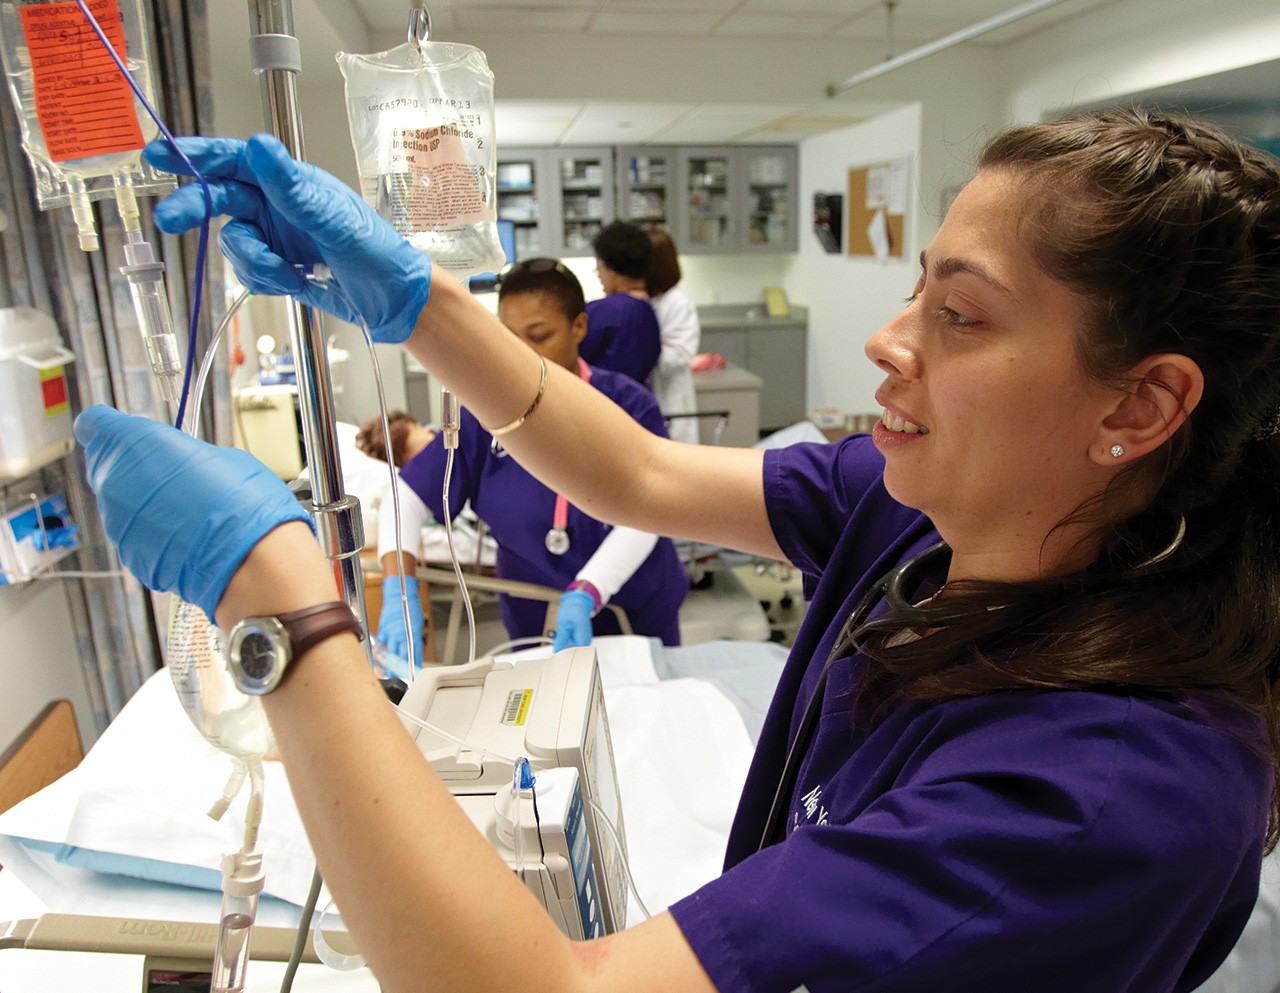 Nursing student putting in an IV drip